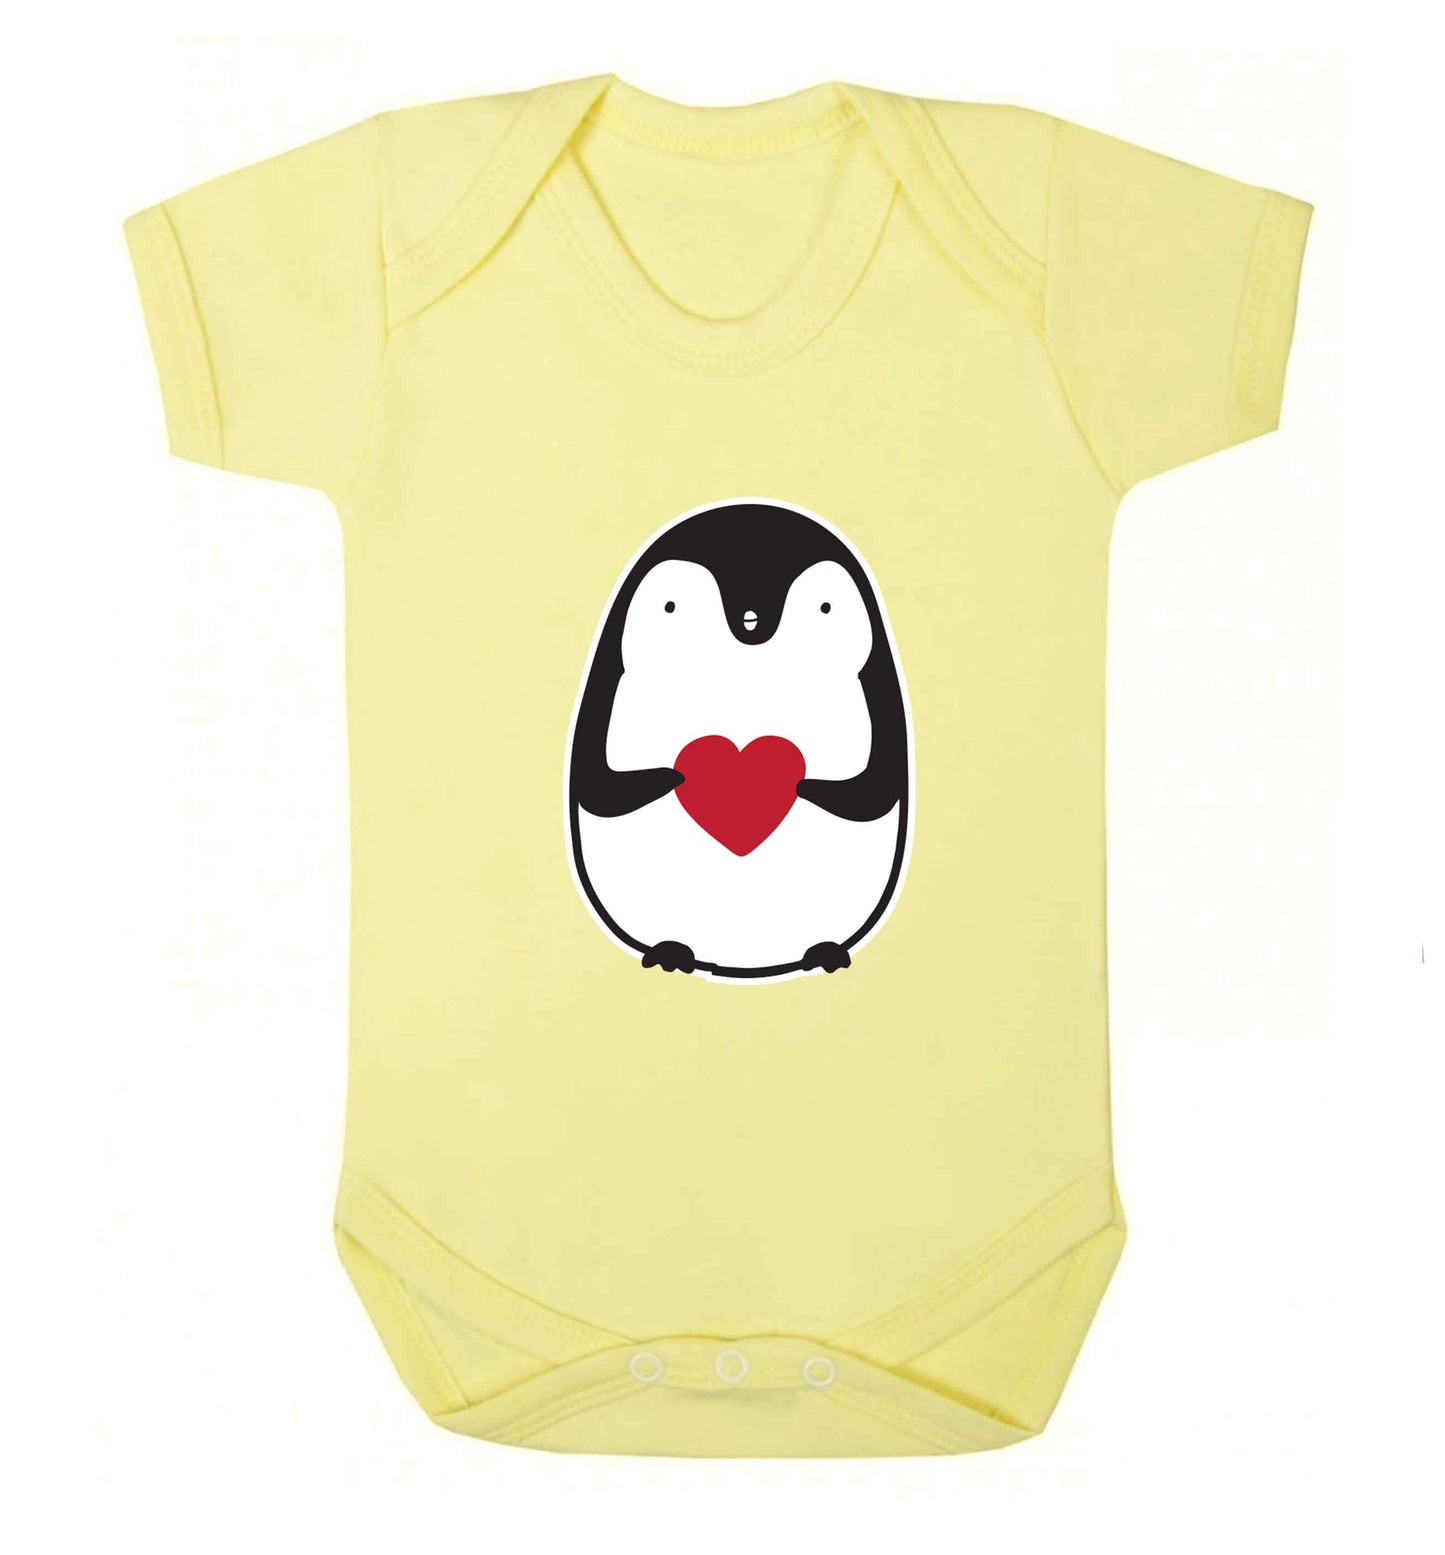 Cute penguin heart baby vest pale yellow 18-24 months